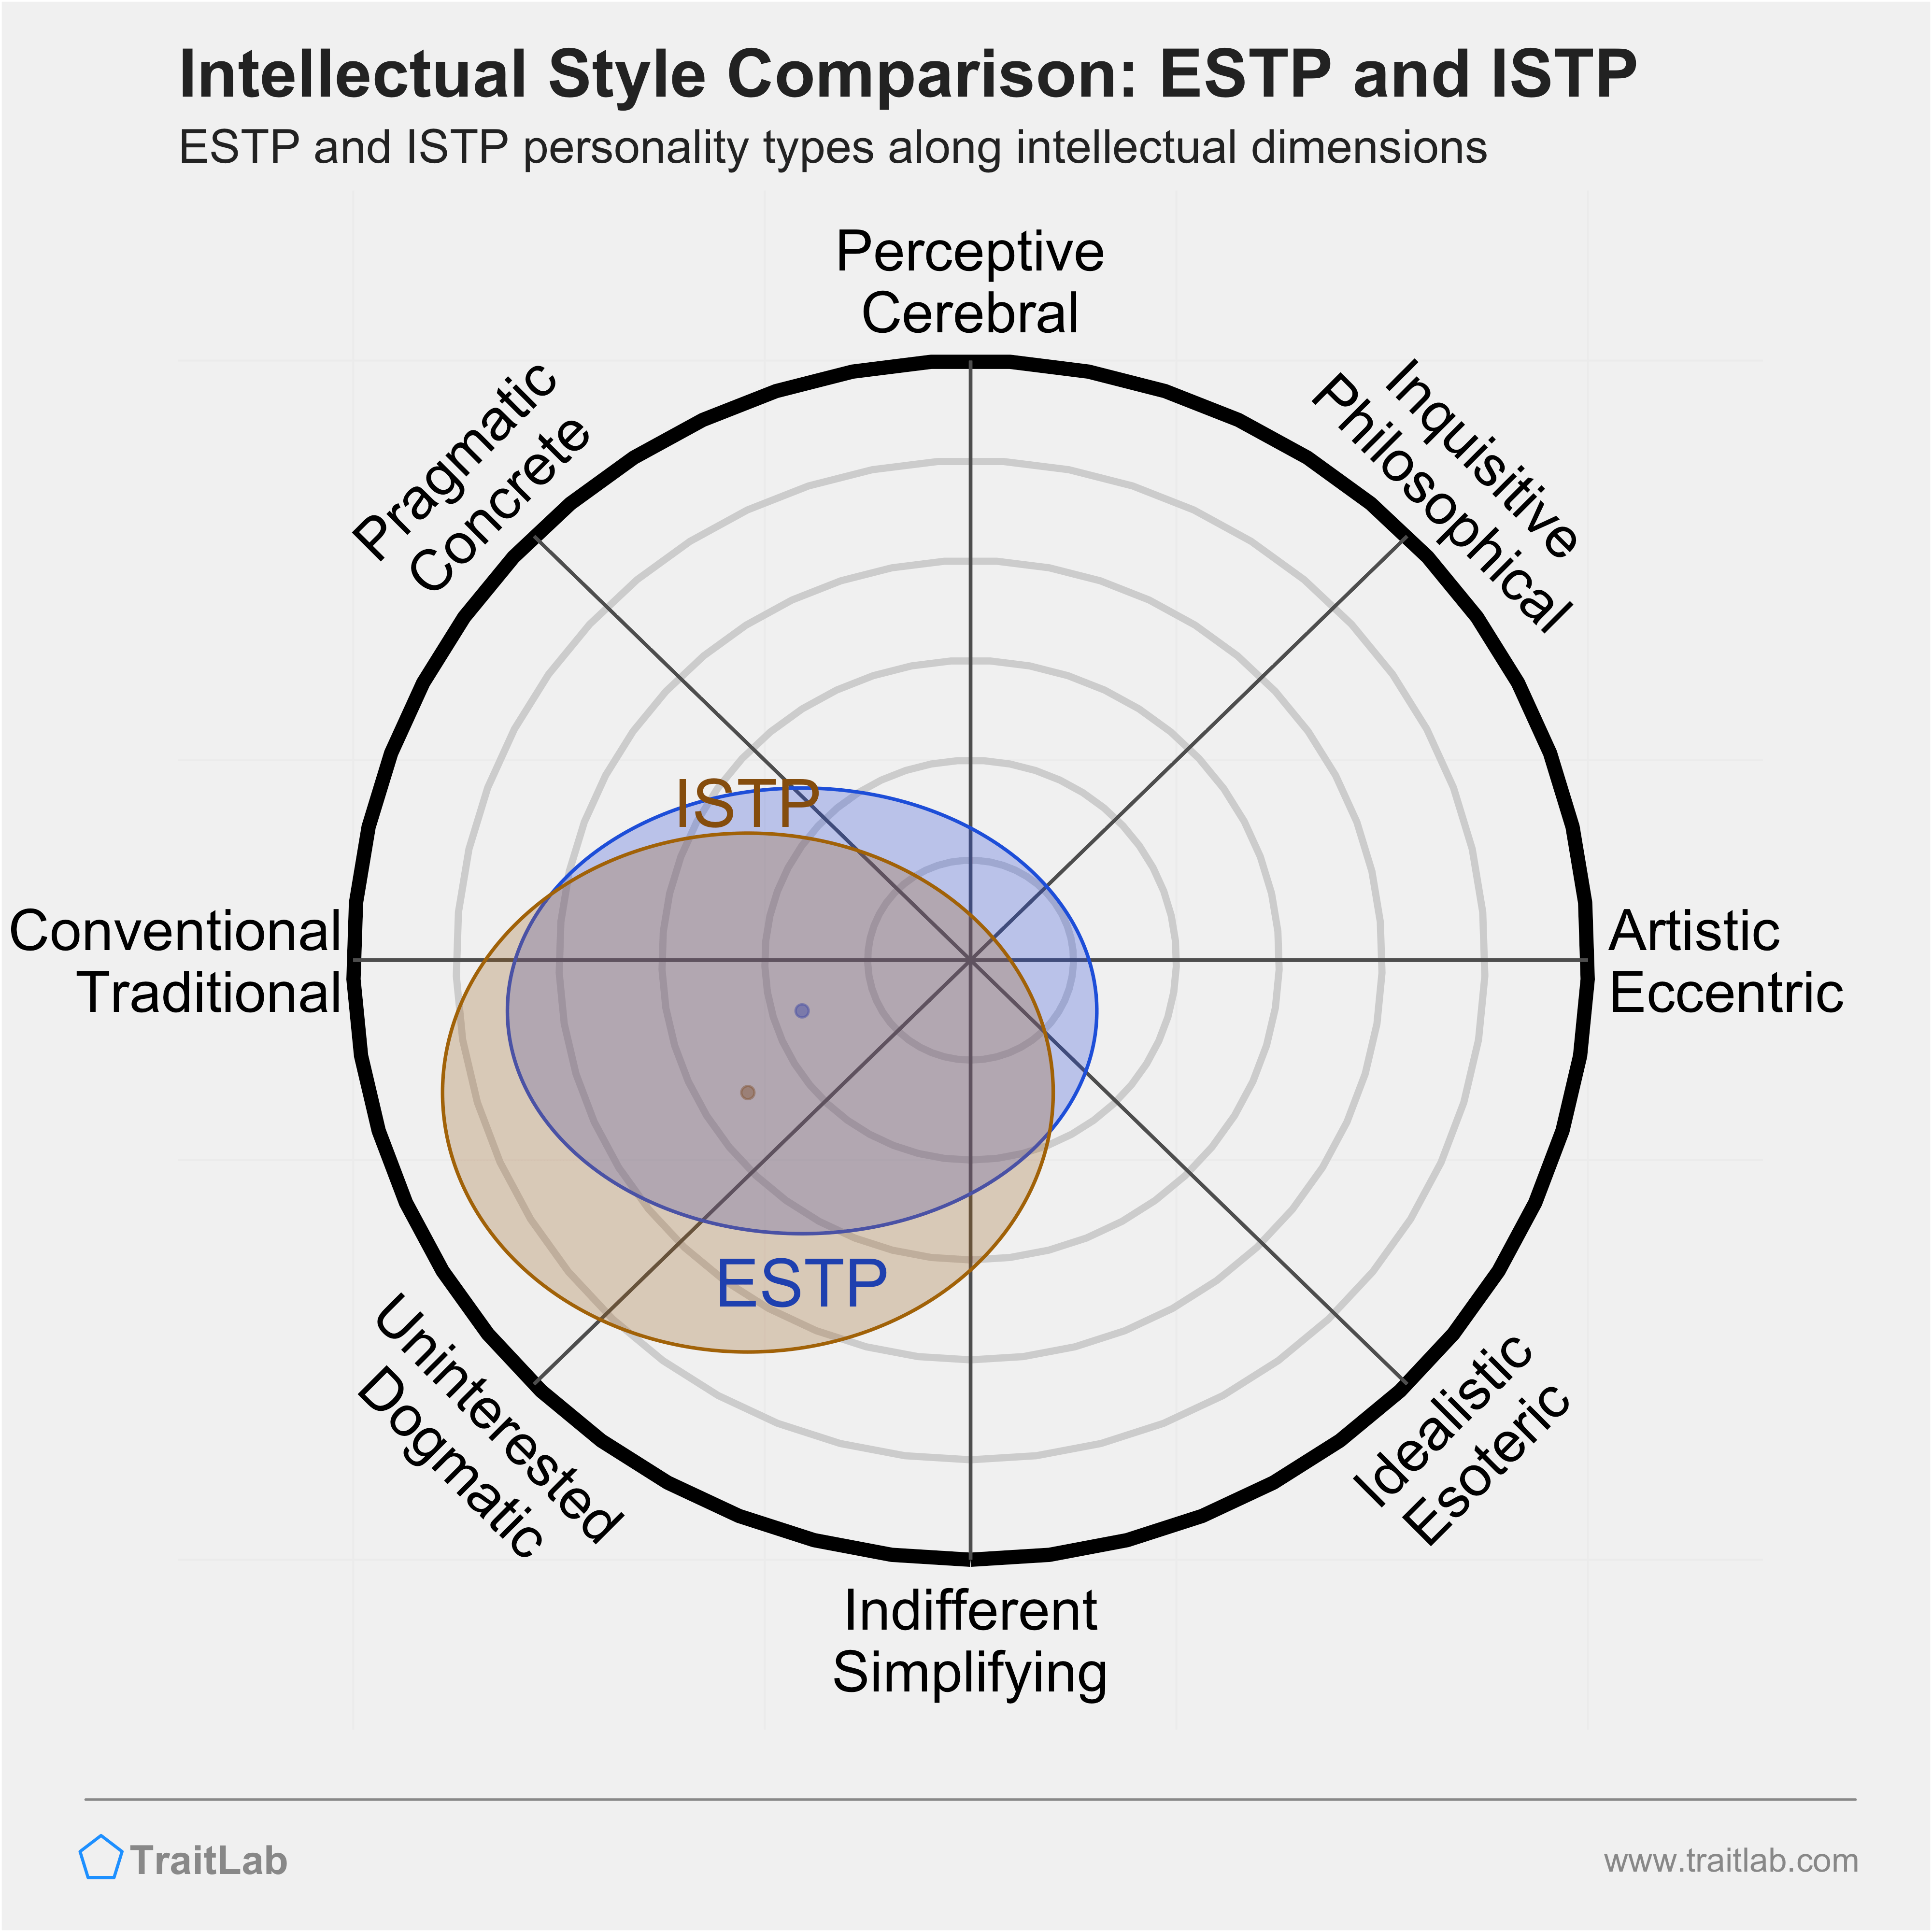 ESTP and ISTP comparison across intellectual dimensions